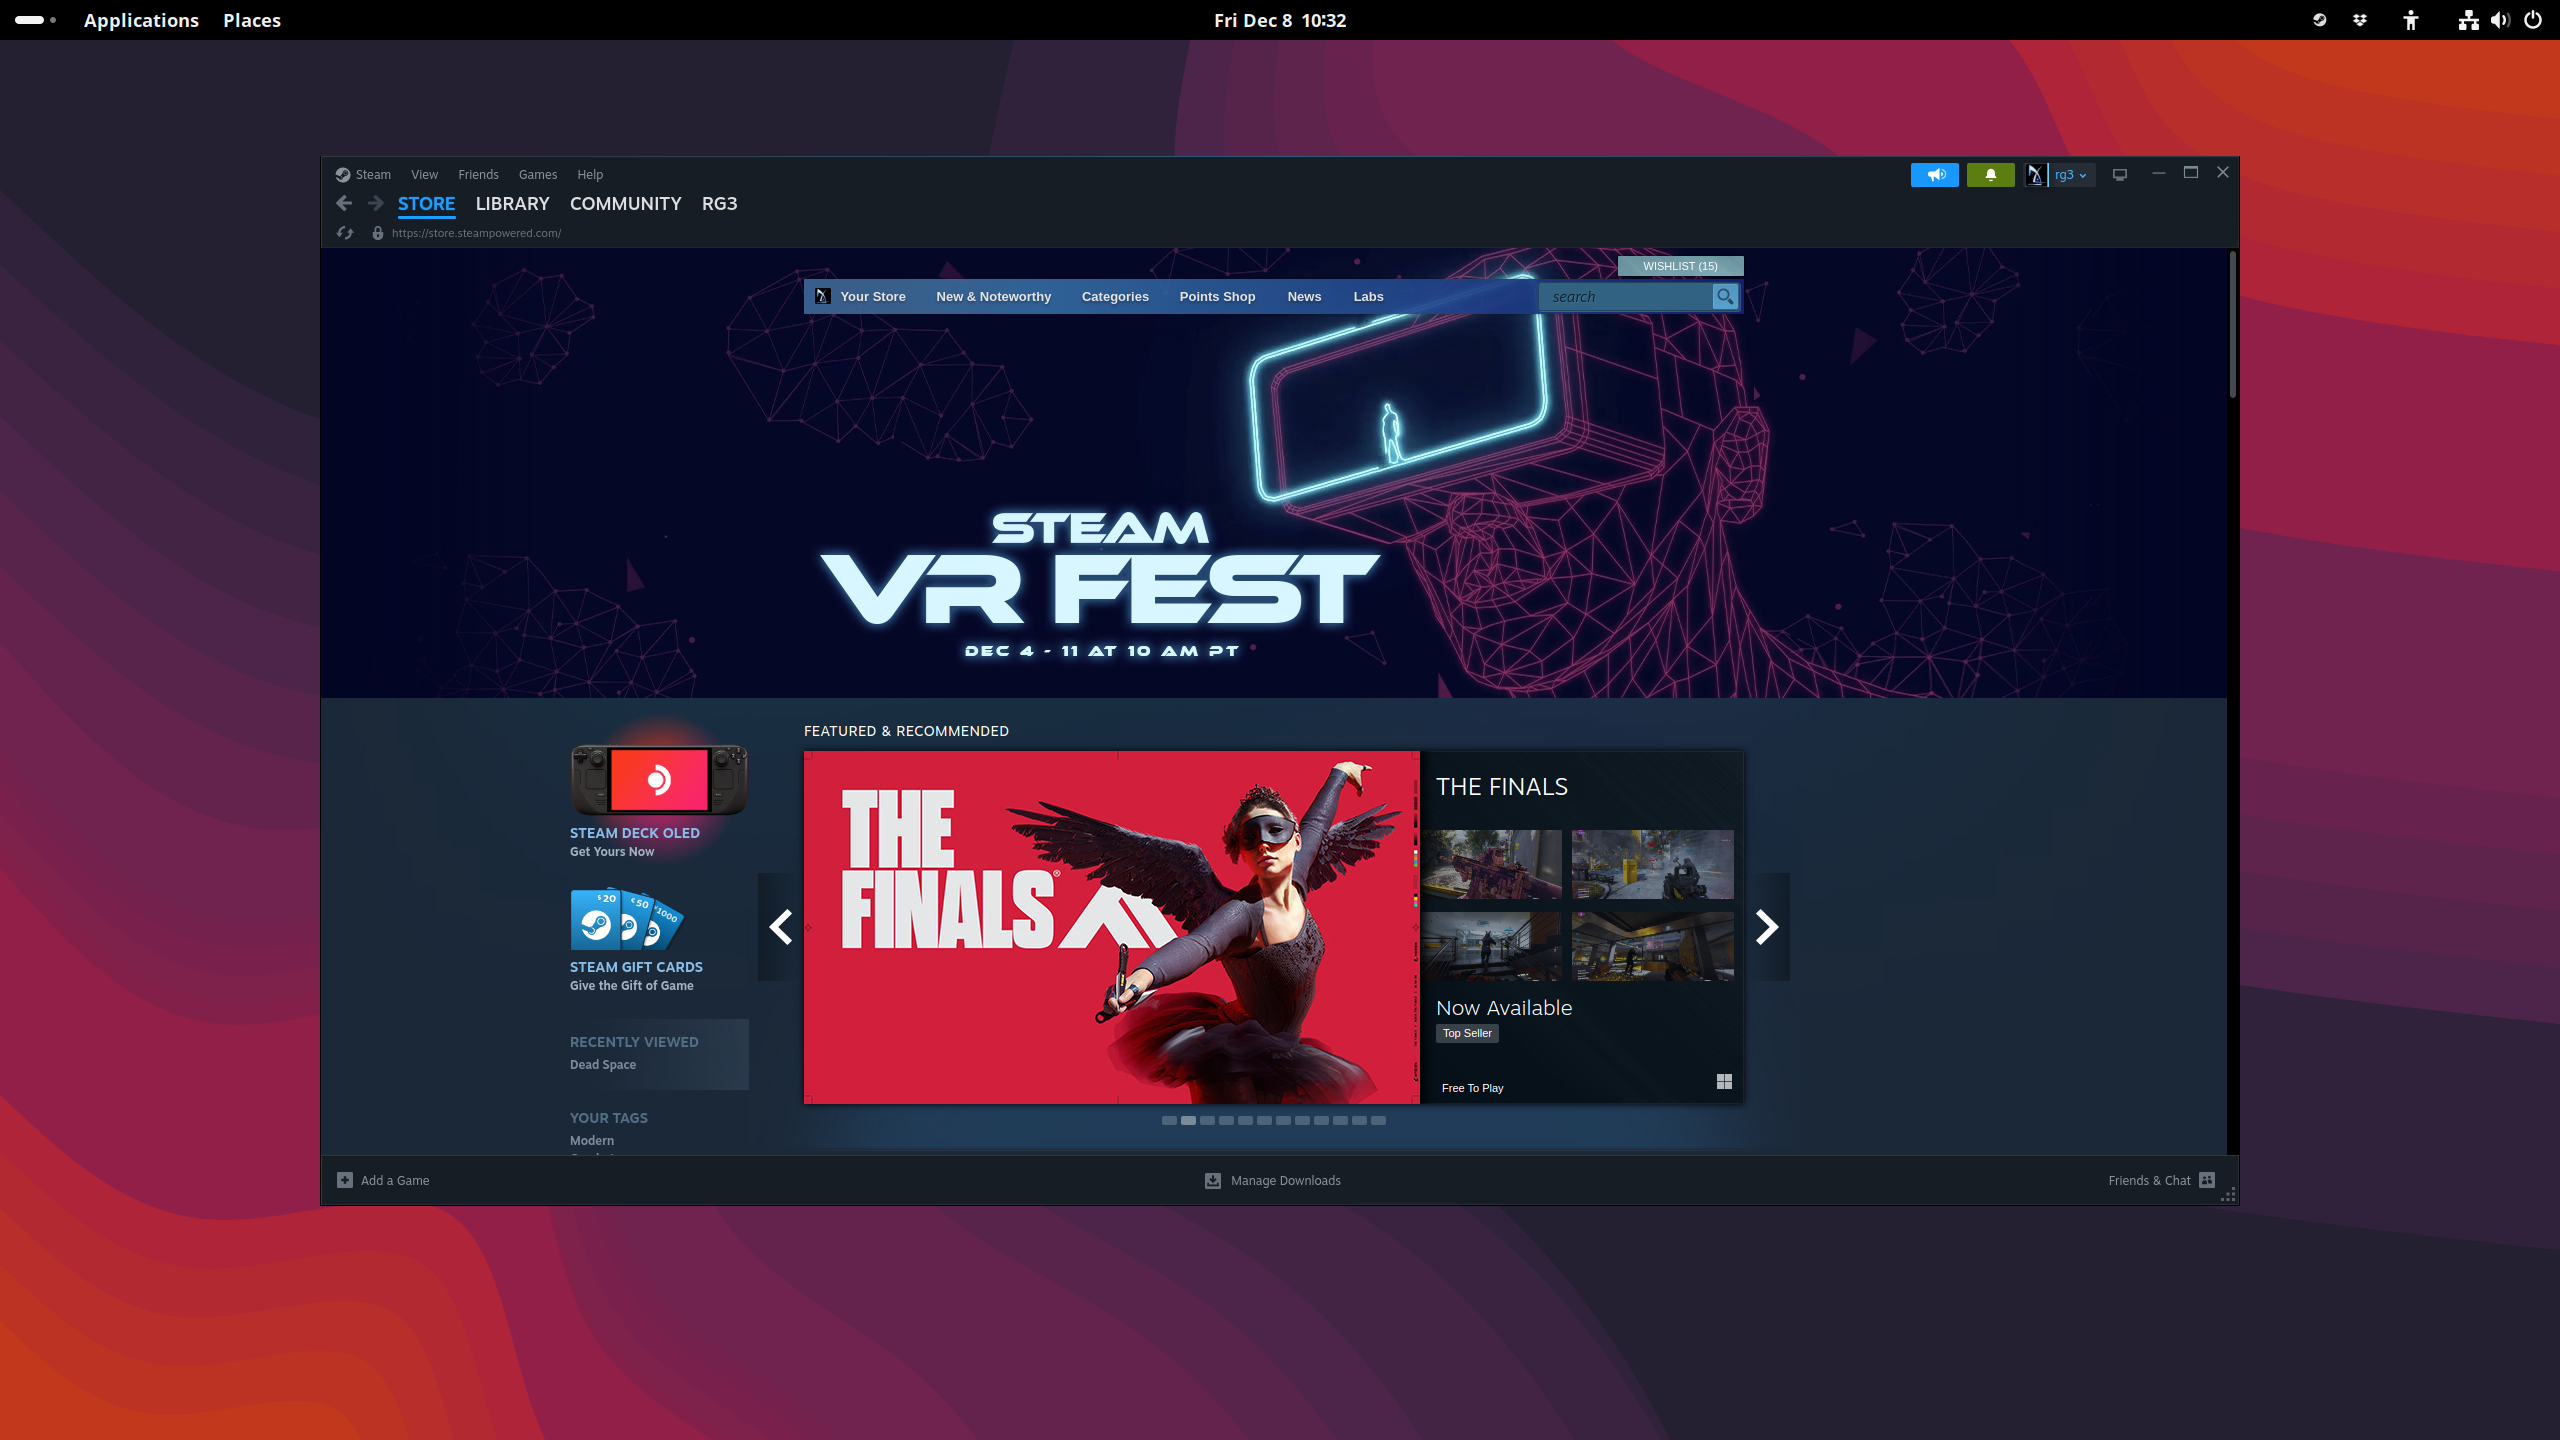 Steam Deck Gameplay - Far Cry 6 - Ubisoft Connect - Steam OS 